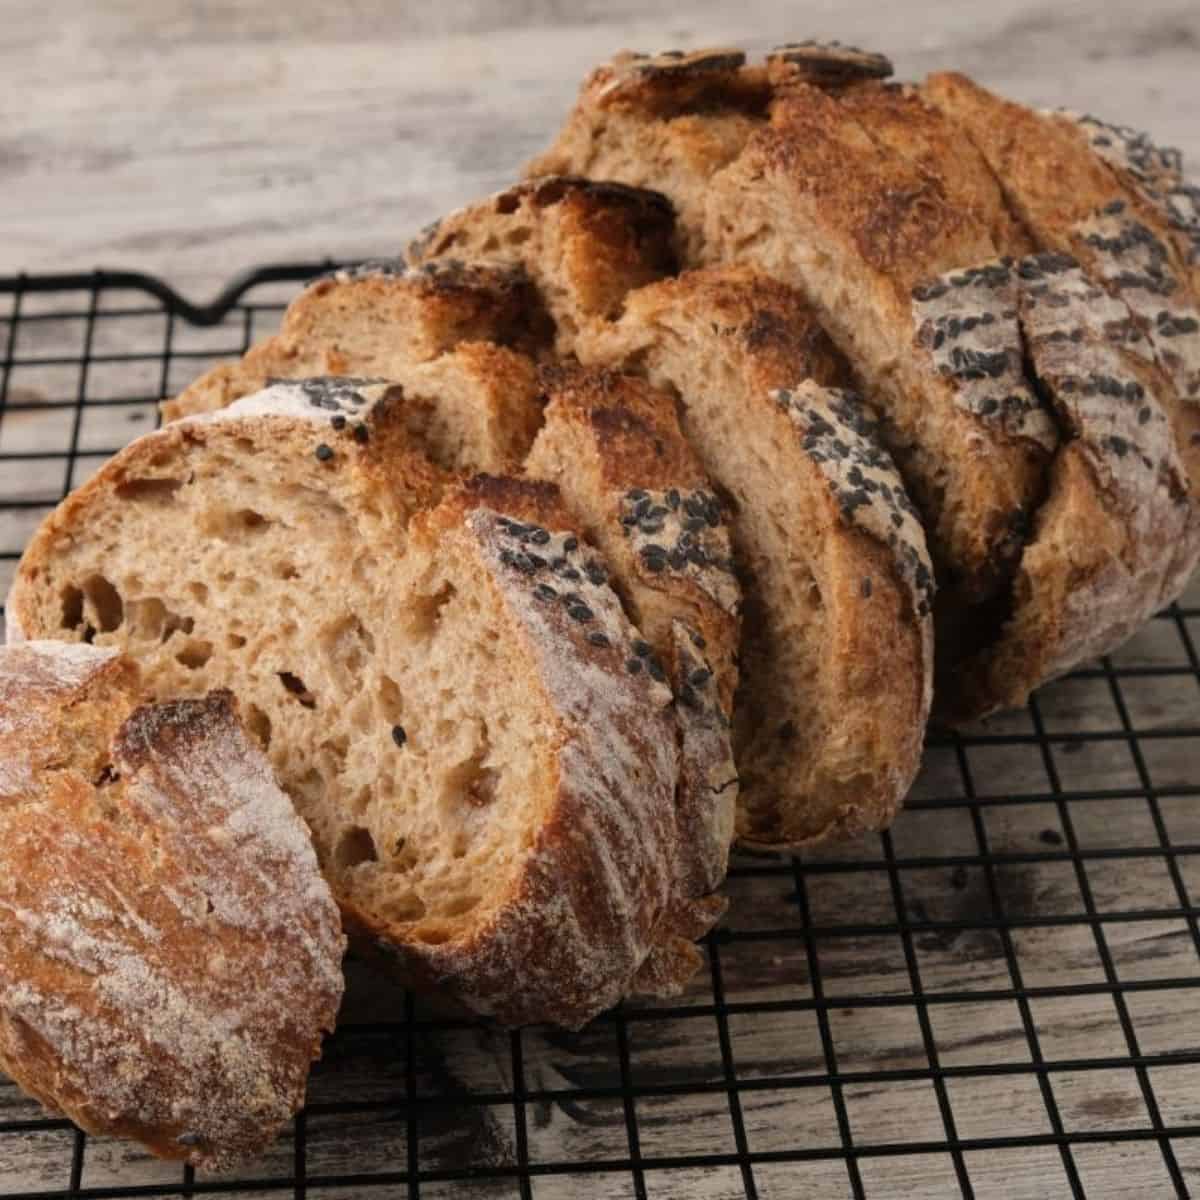 https://breadopedia.com/wp-content/uploads/2020/09/best-bread-cooling-racks-featured.jpg